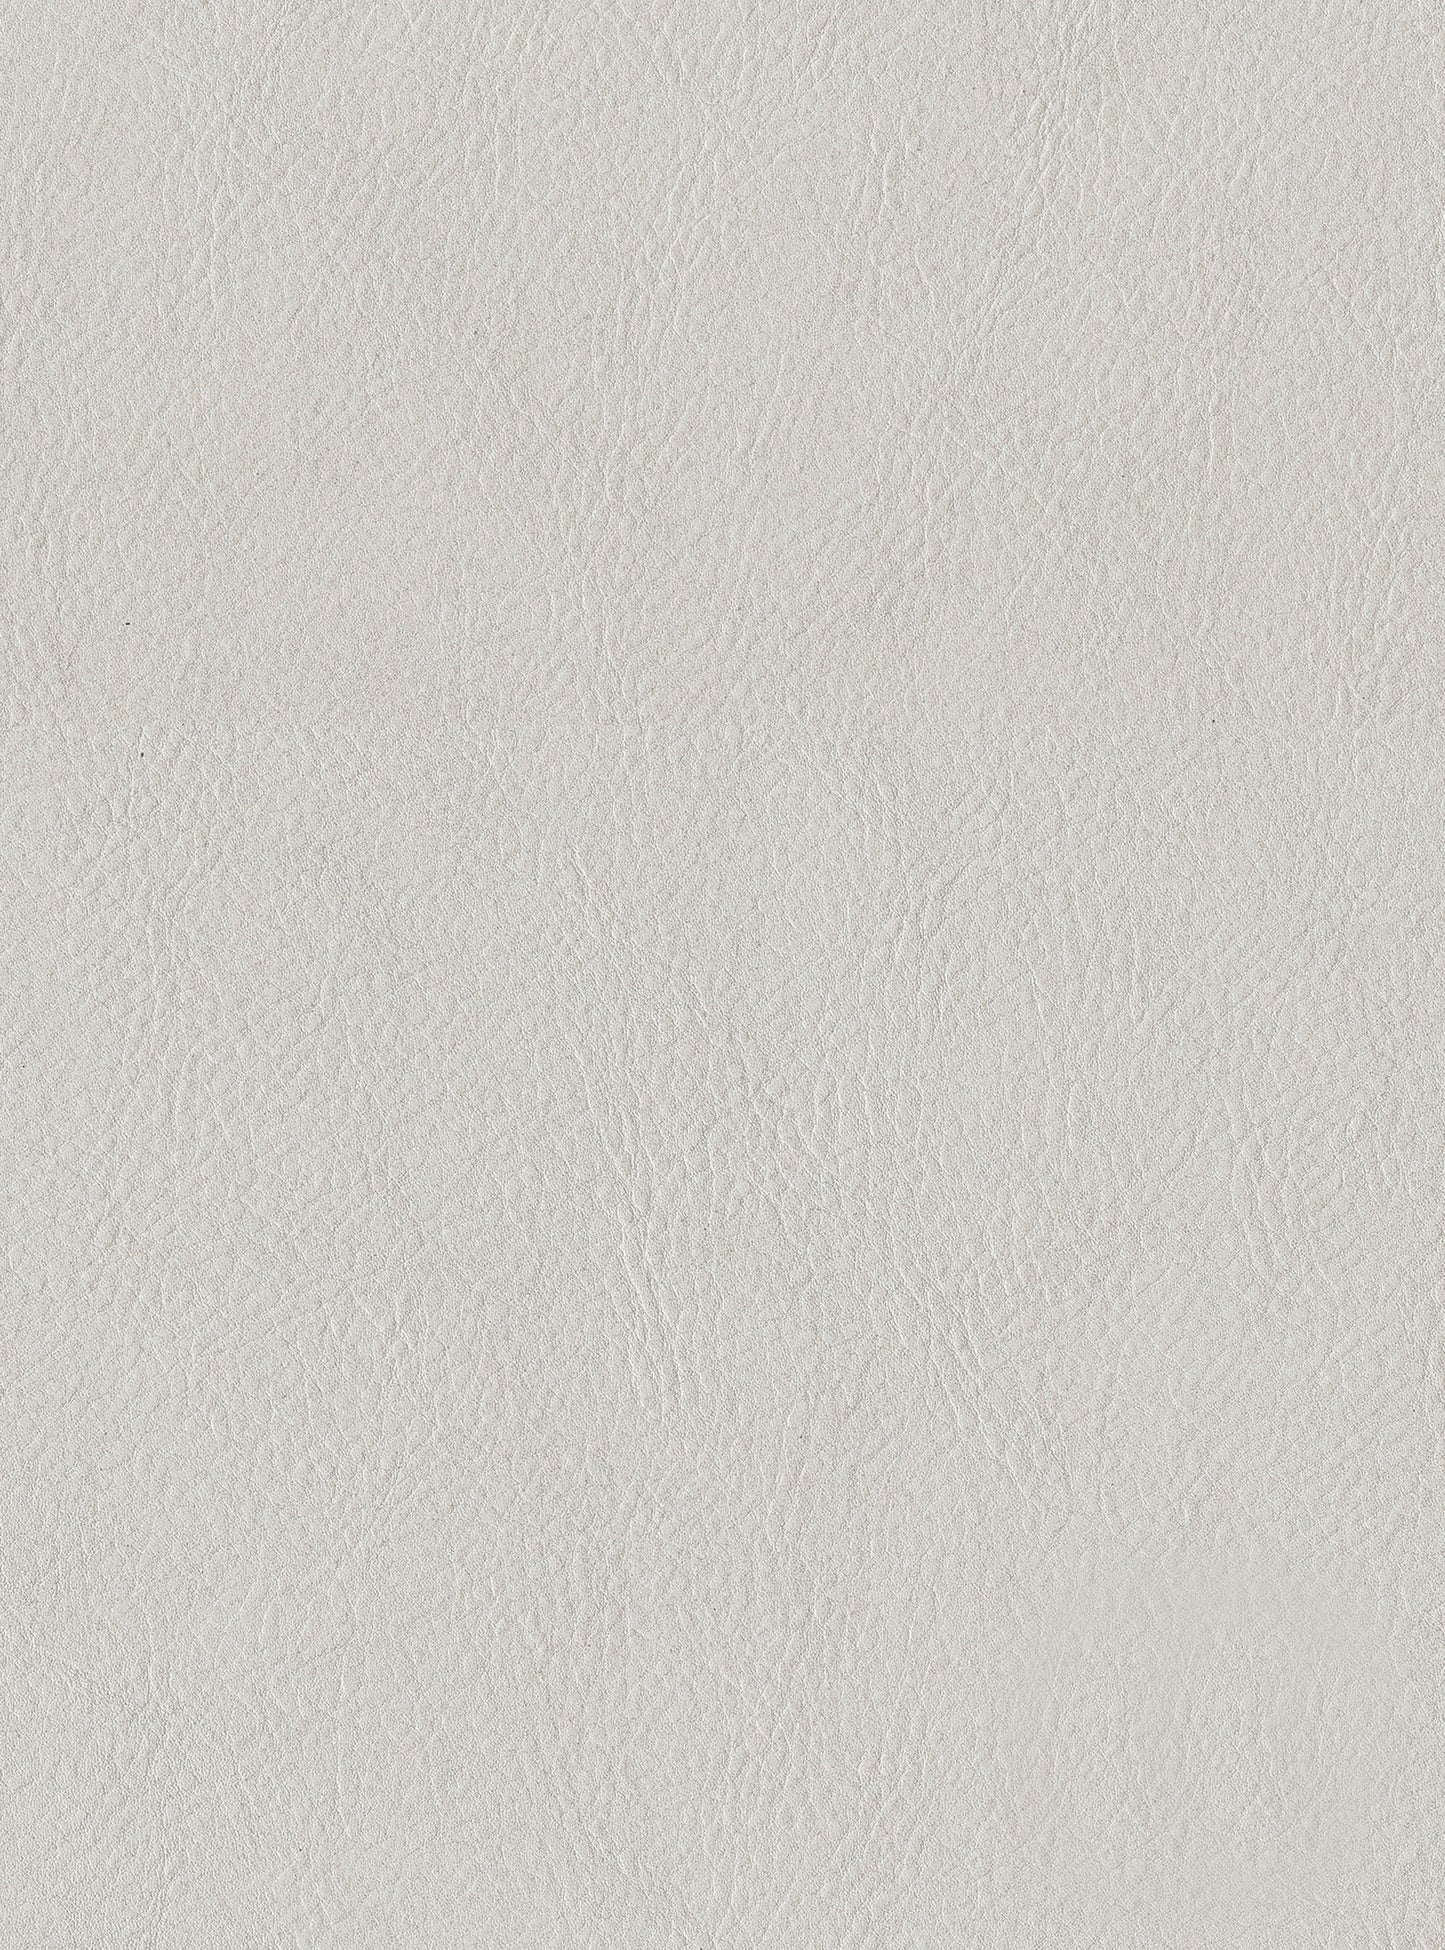 Vintage Leather White Wallpaper